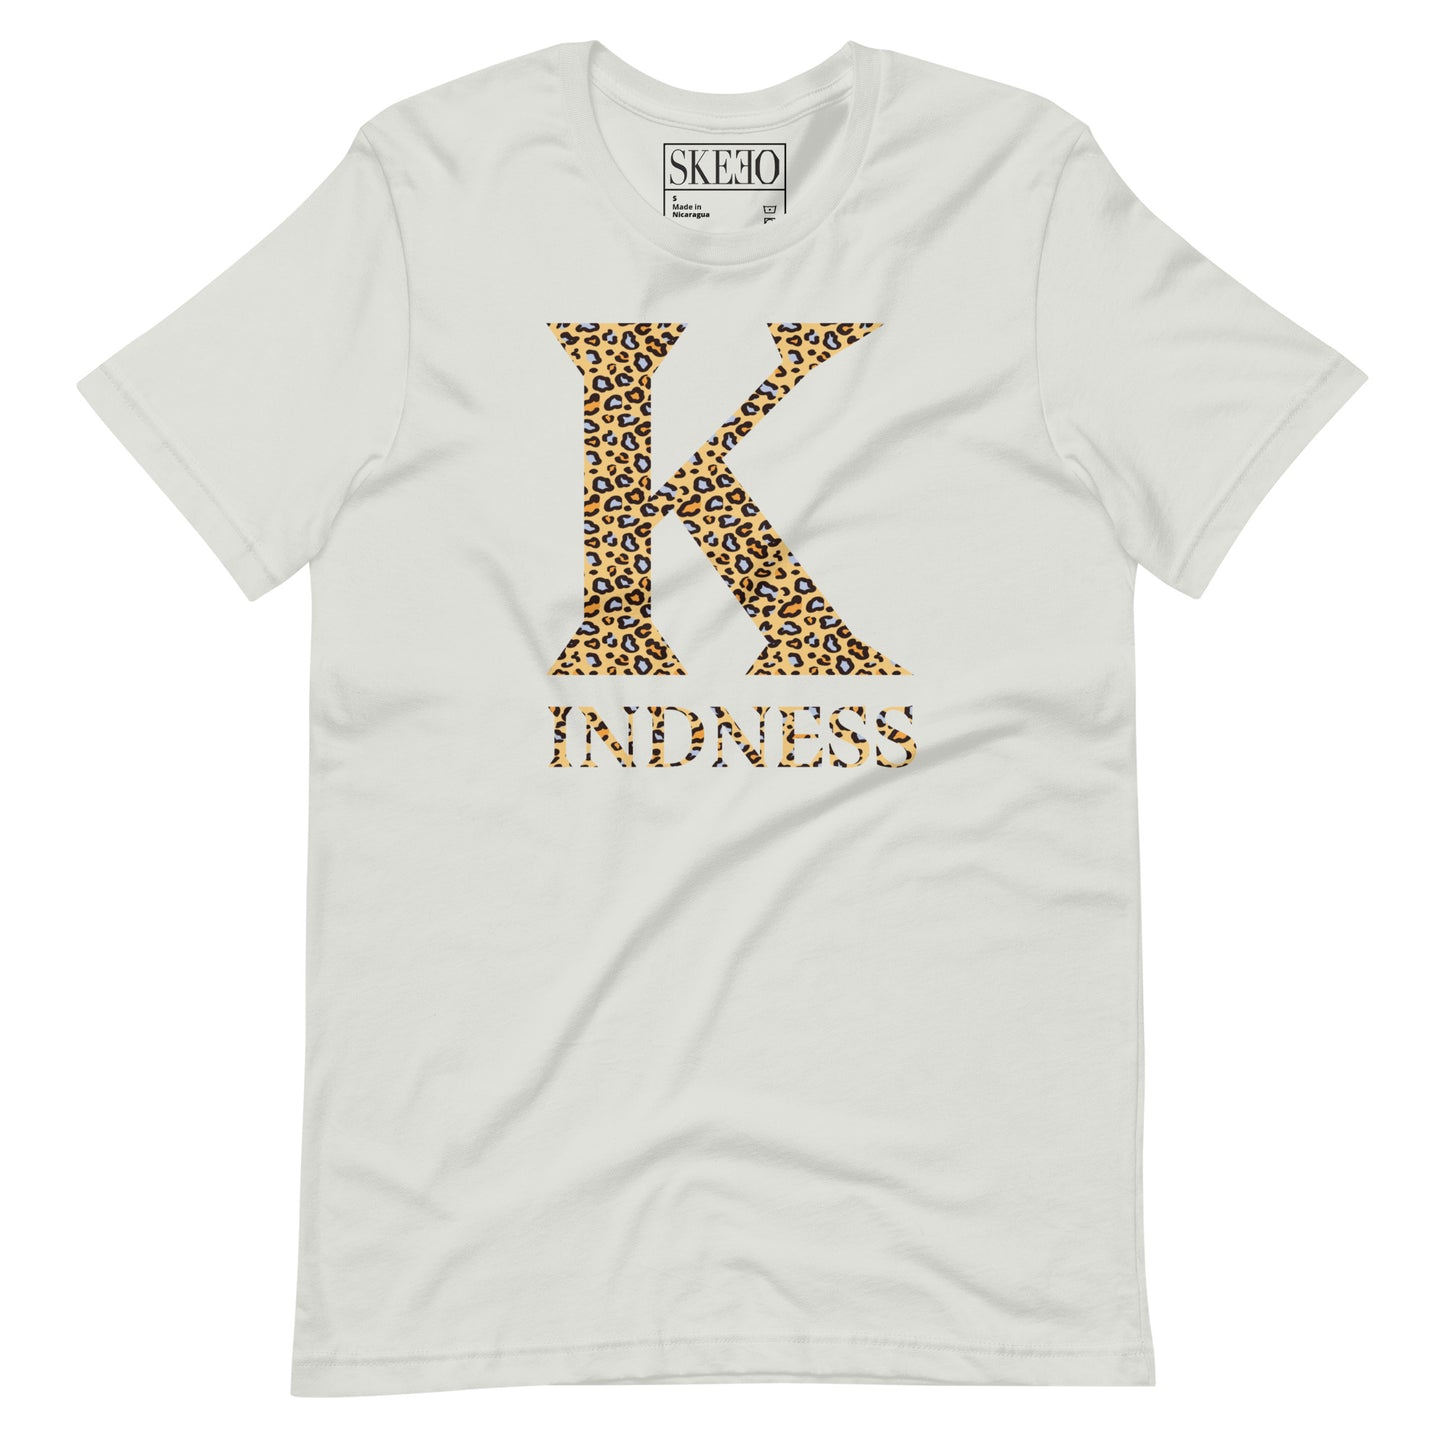 A A SK Kindness t-shirt